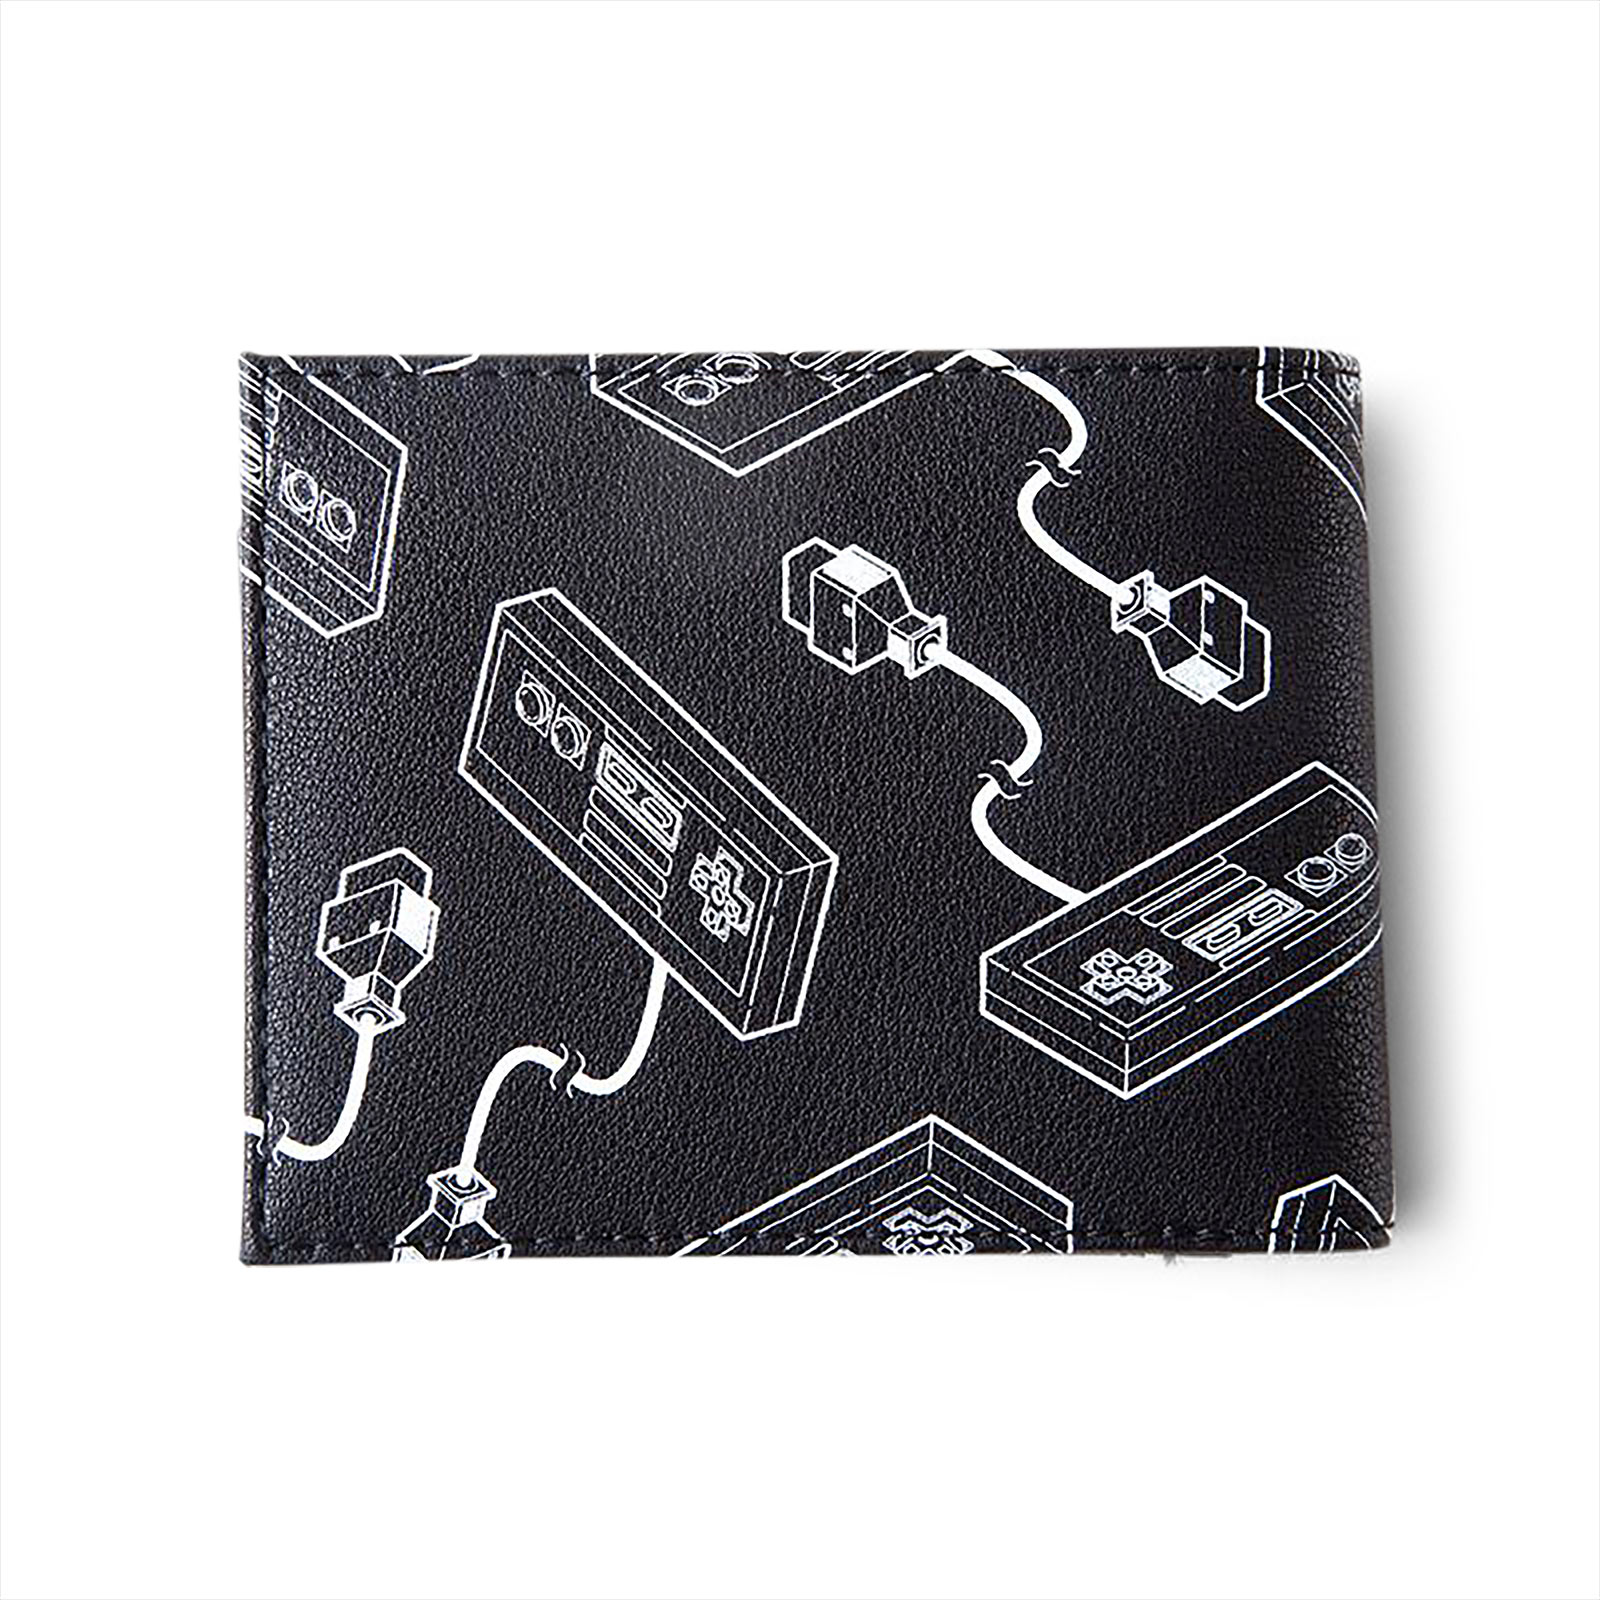 Nintendo - NES Controller Wallet black